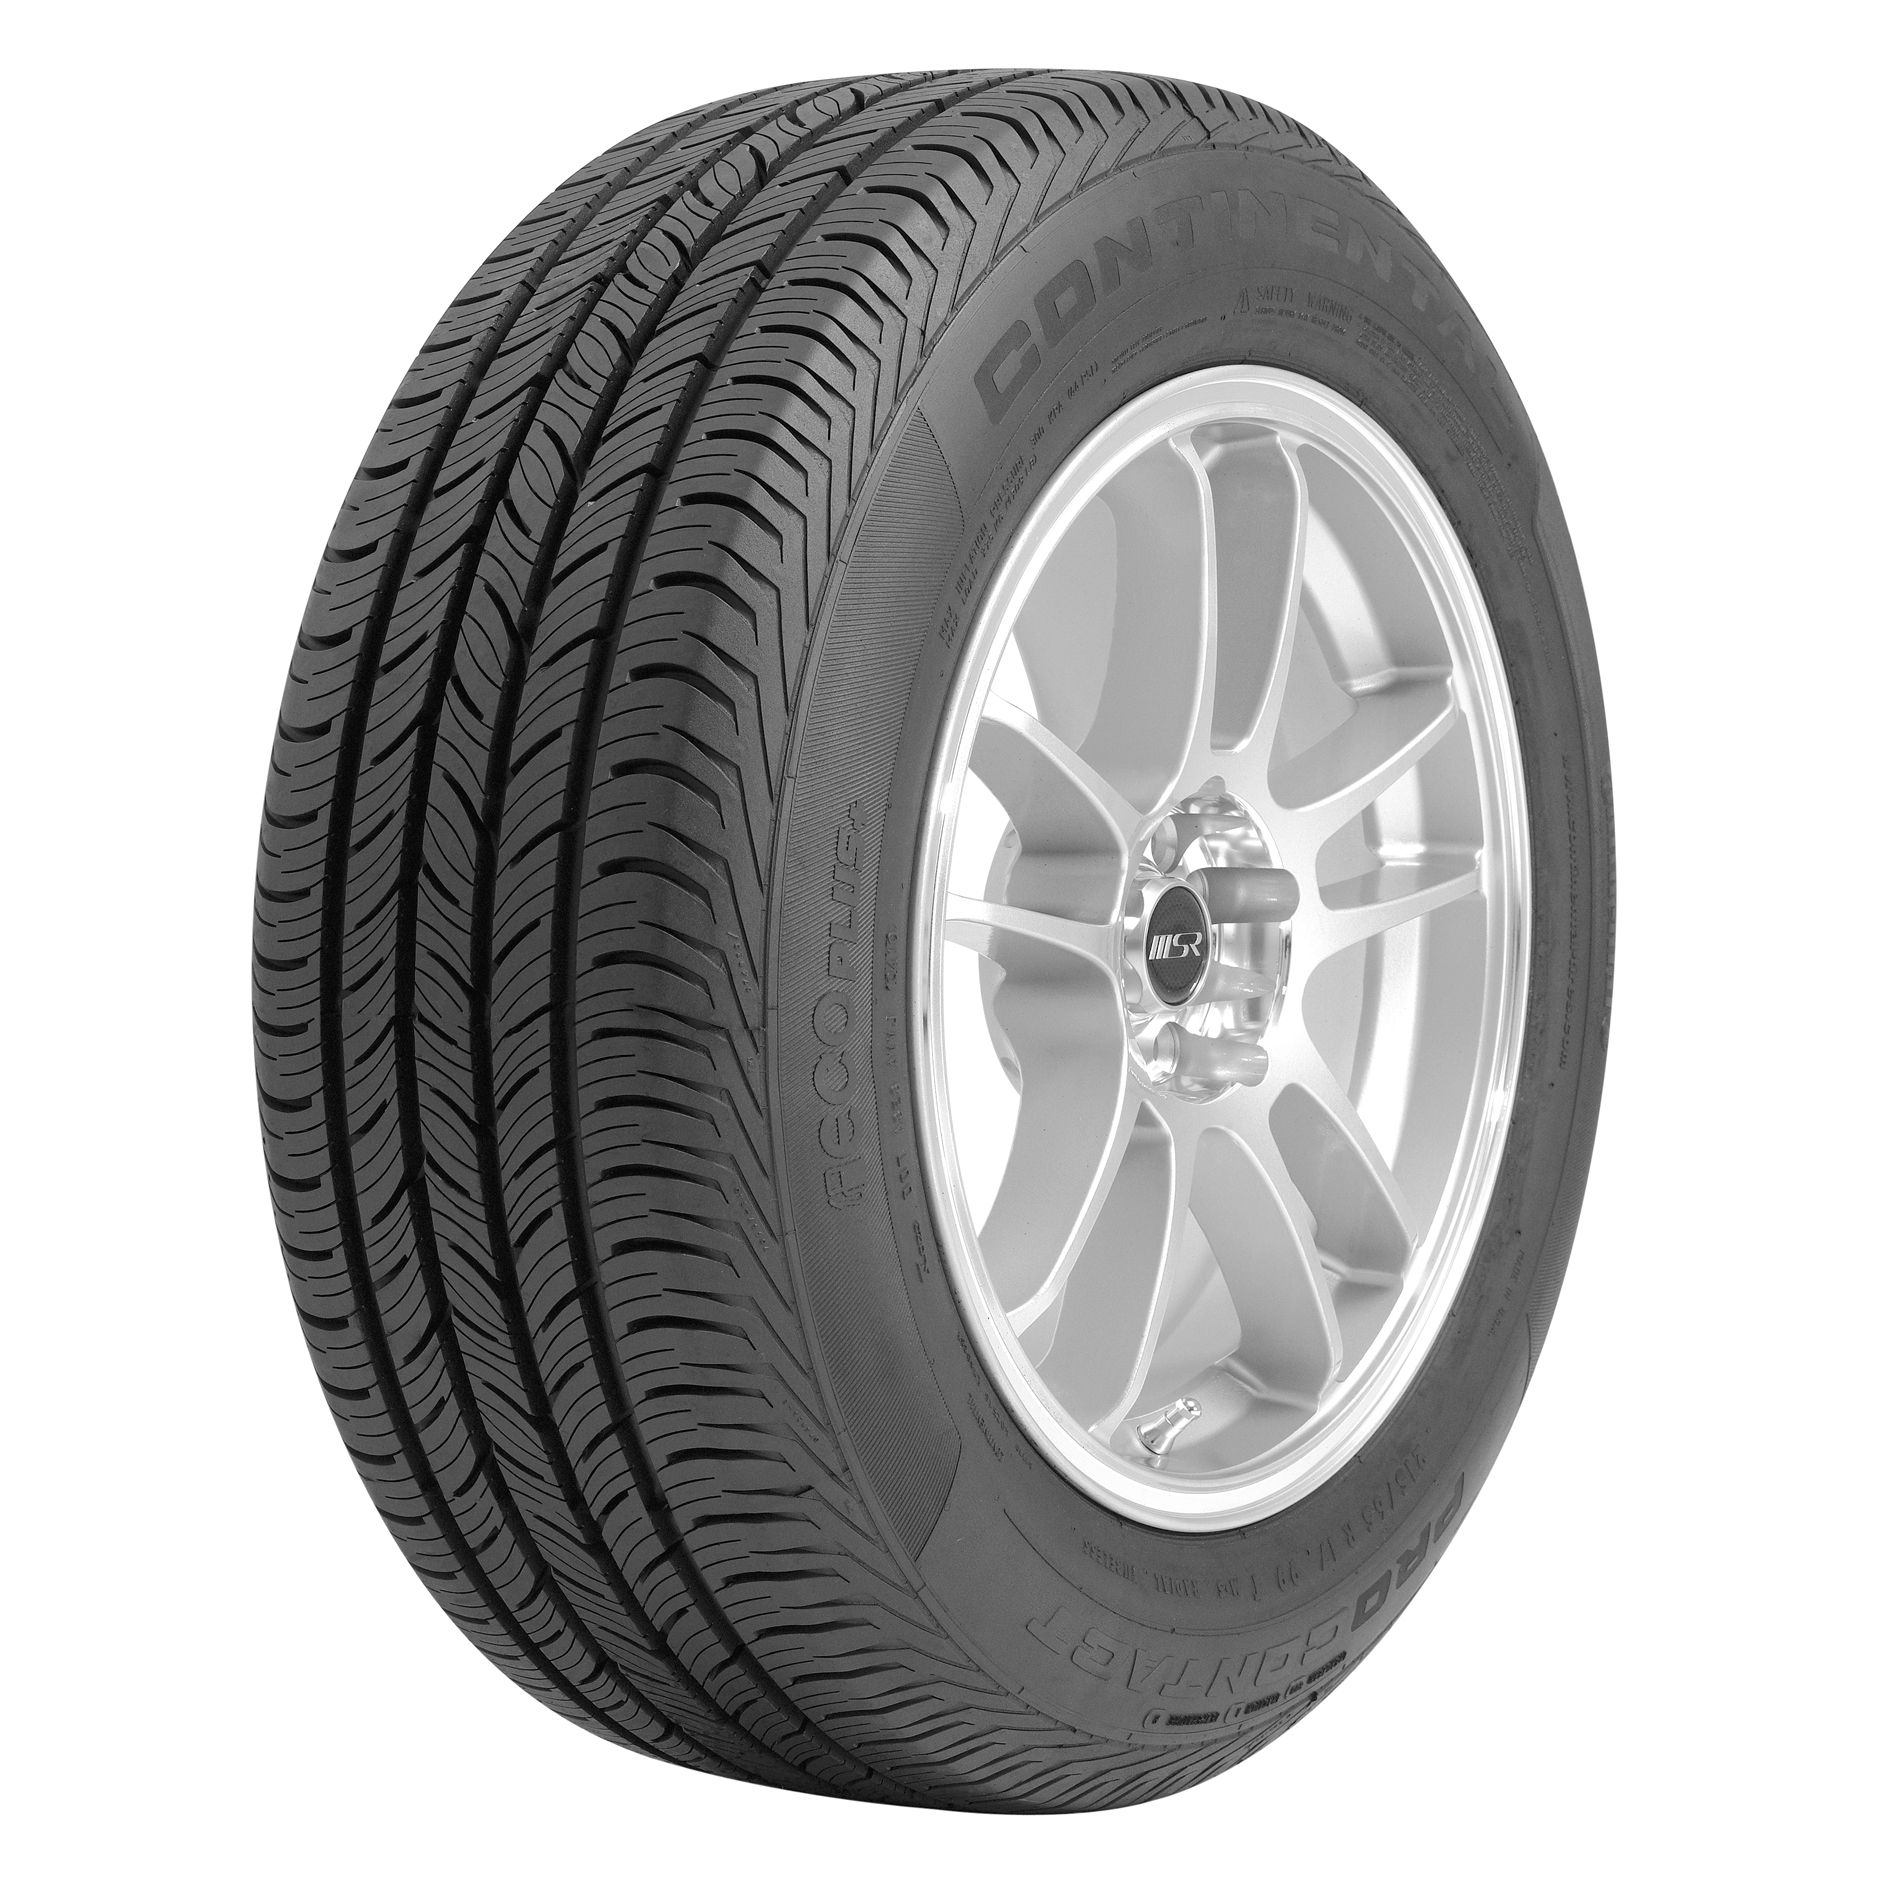 Continental Pro Contact Eco Plus - 235/65R17 104T BW - All-Season Tire